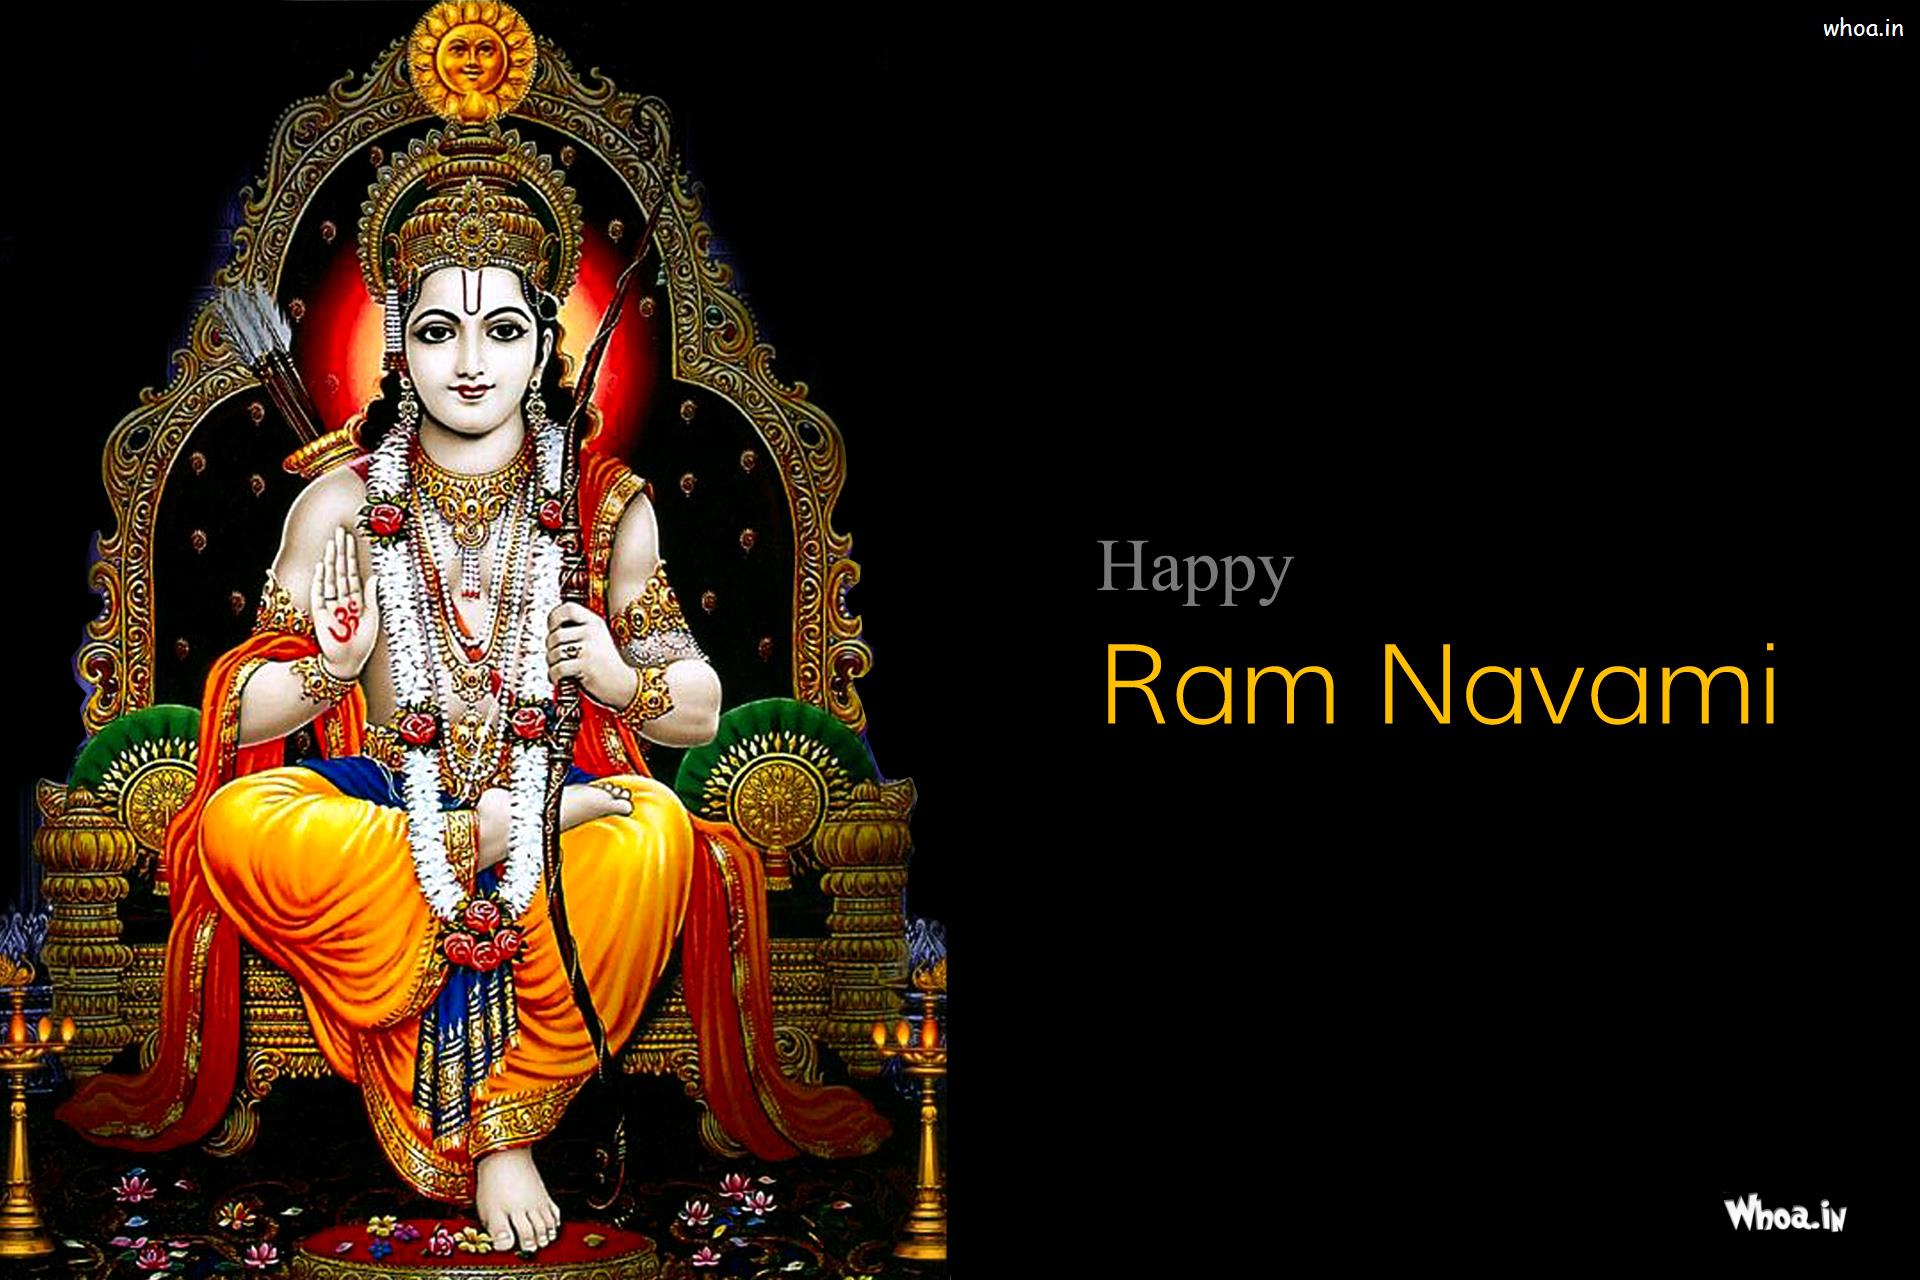 Rama Navami Greetings HD Wallpaper And Picture Image